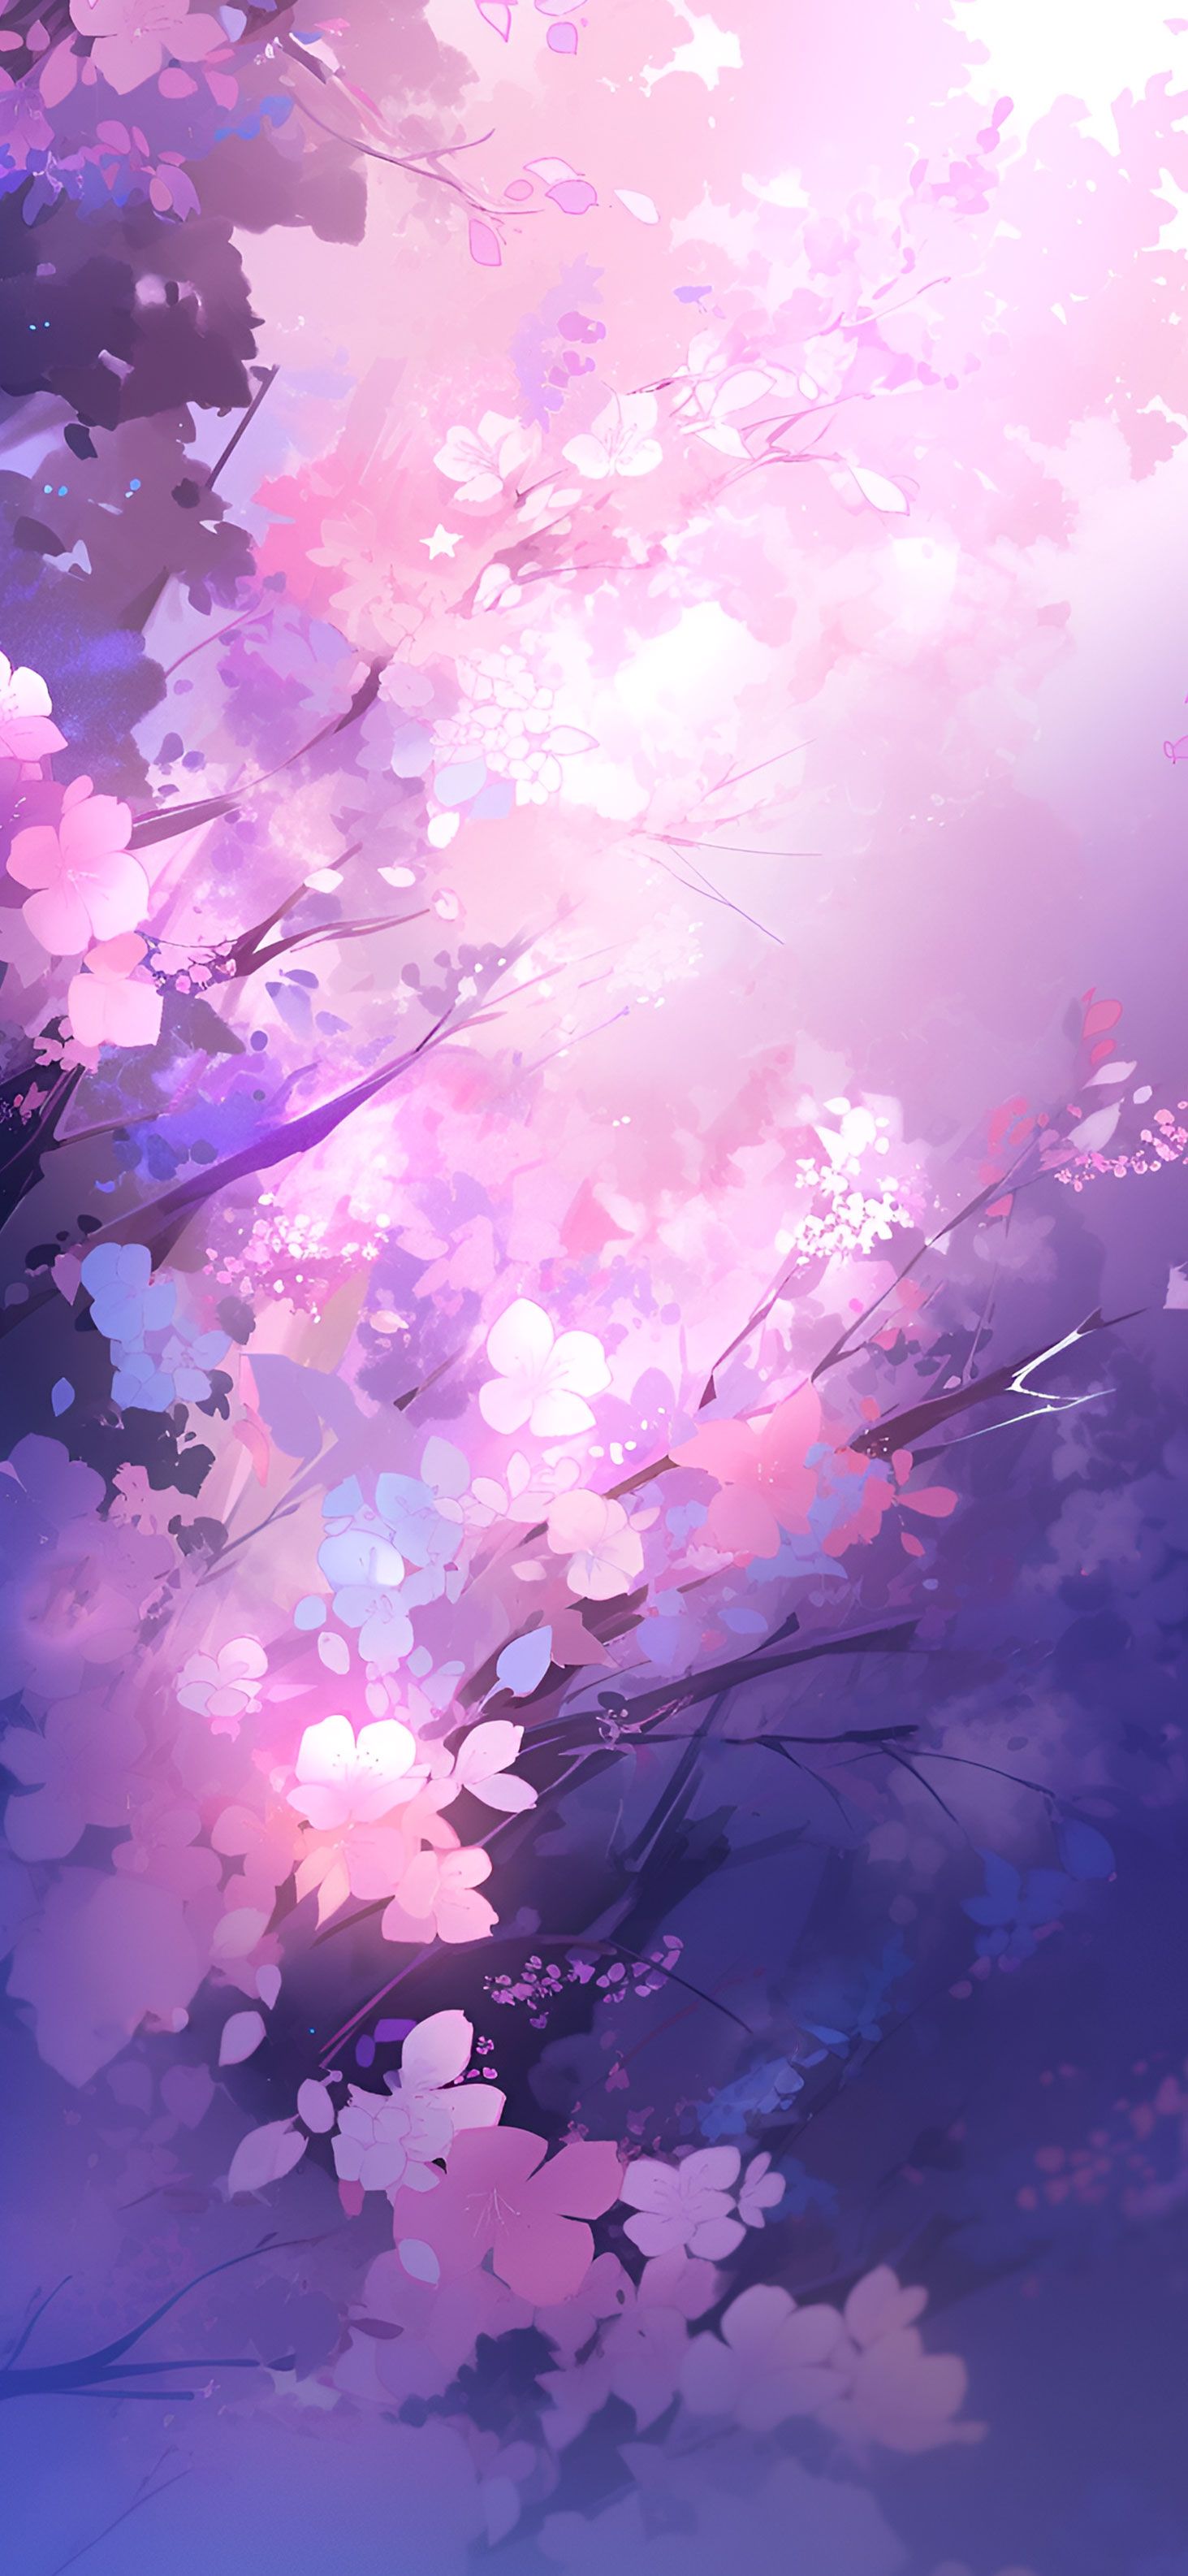  Violett Hintergrundbild 1463x3171. Soft Violet Delicate Nature Wallpaper Aesthetic Wallpaper